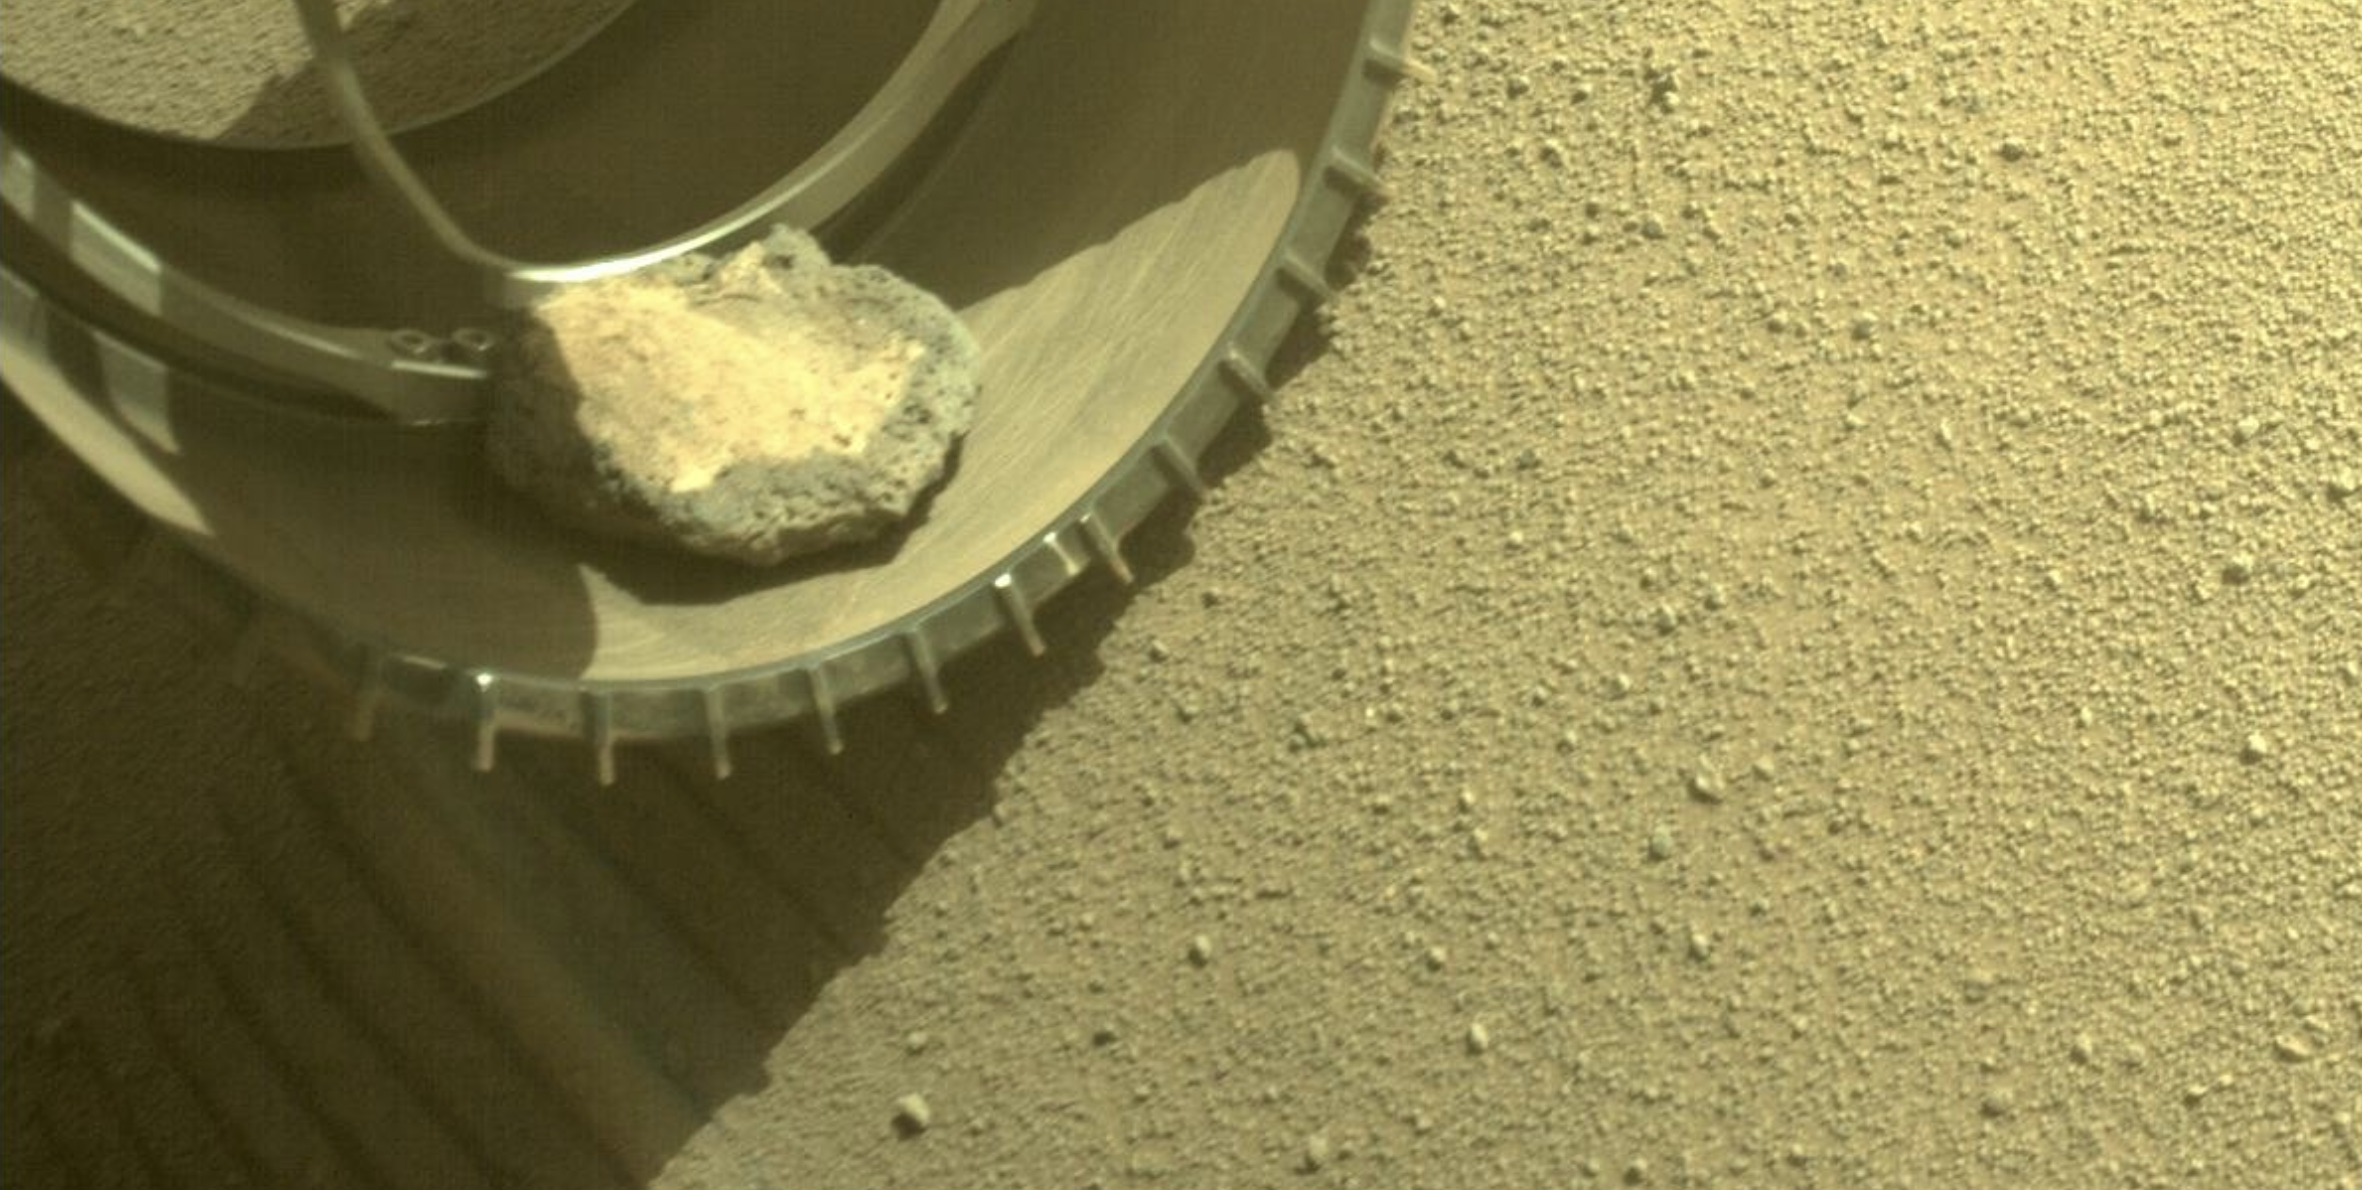 A photo showing the rock on Perseverances wheel. NASA.